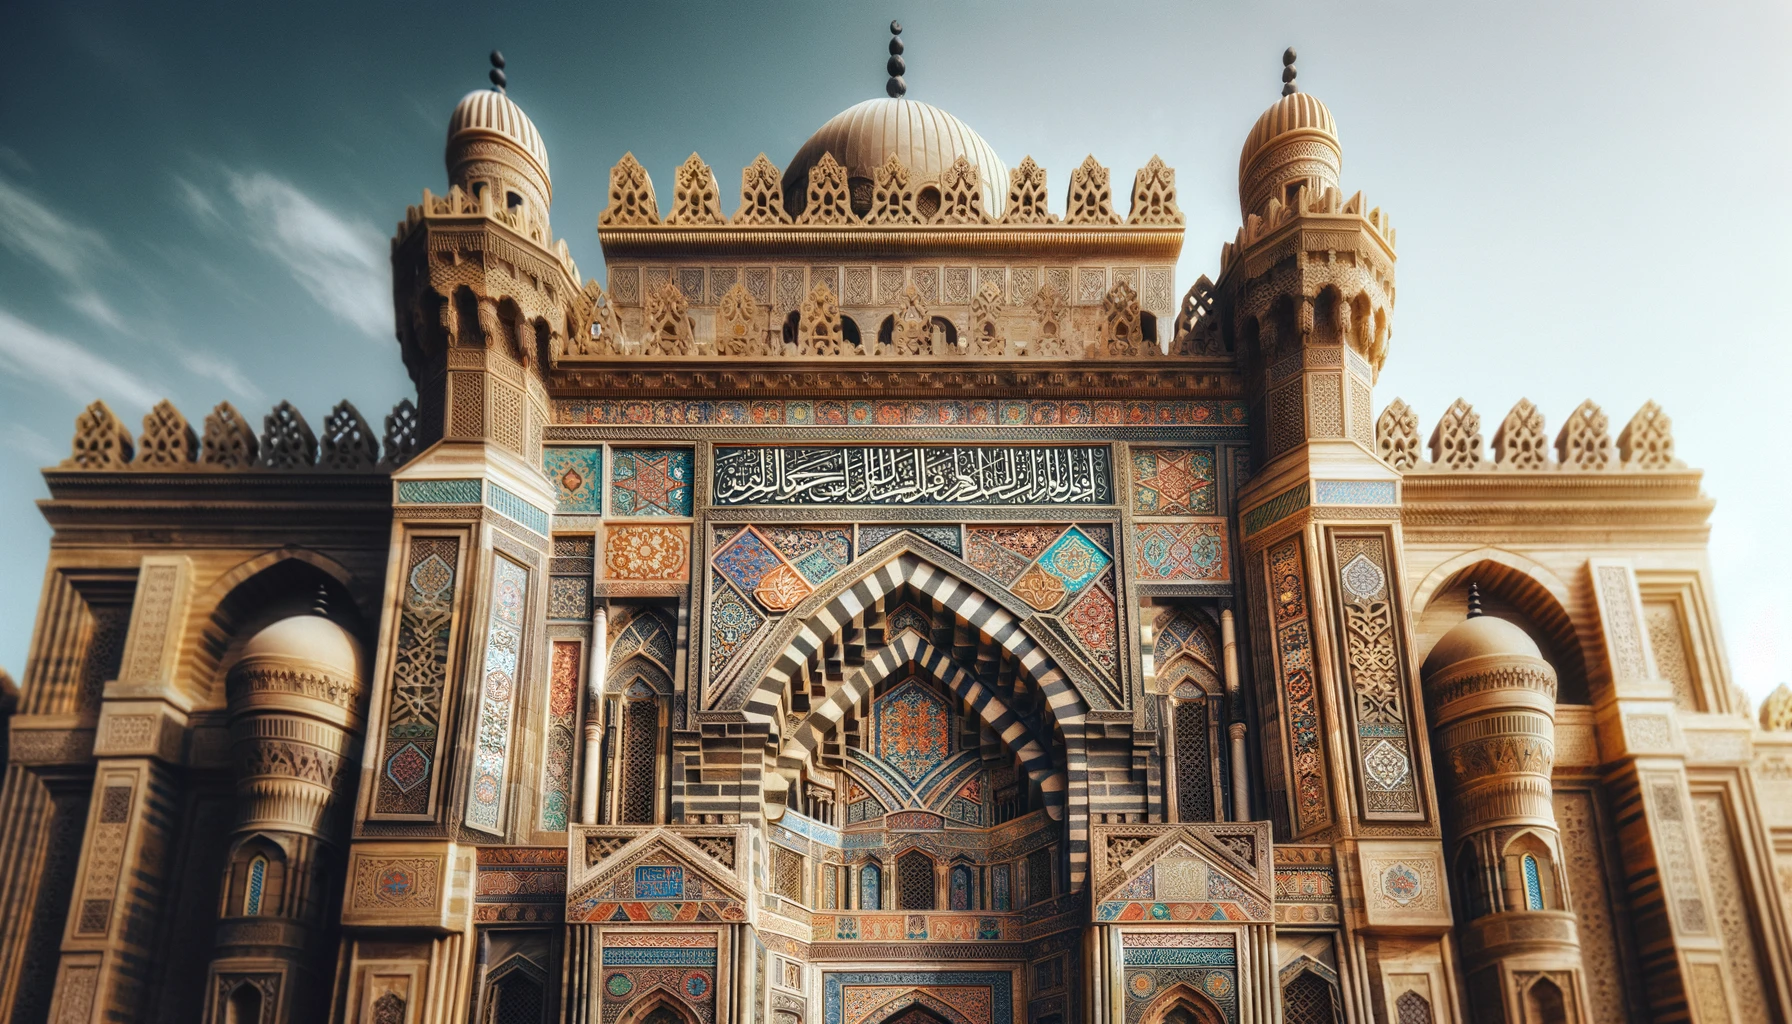 Al-Mansur Qalawun Mosque, the jewel of Islamic heritage in Cairo